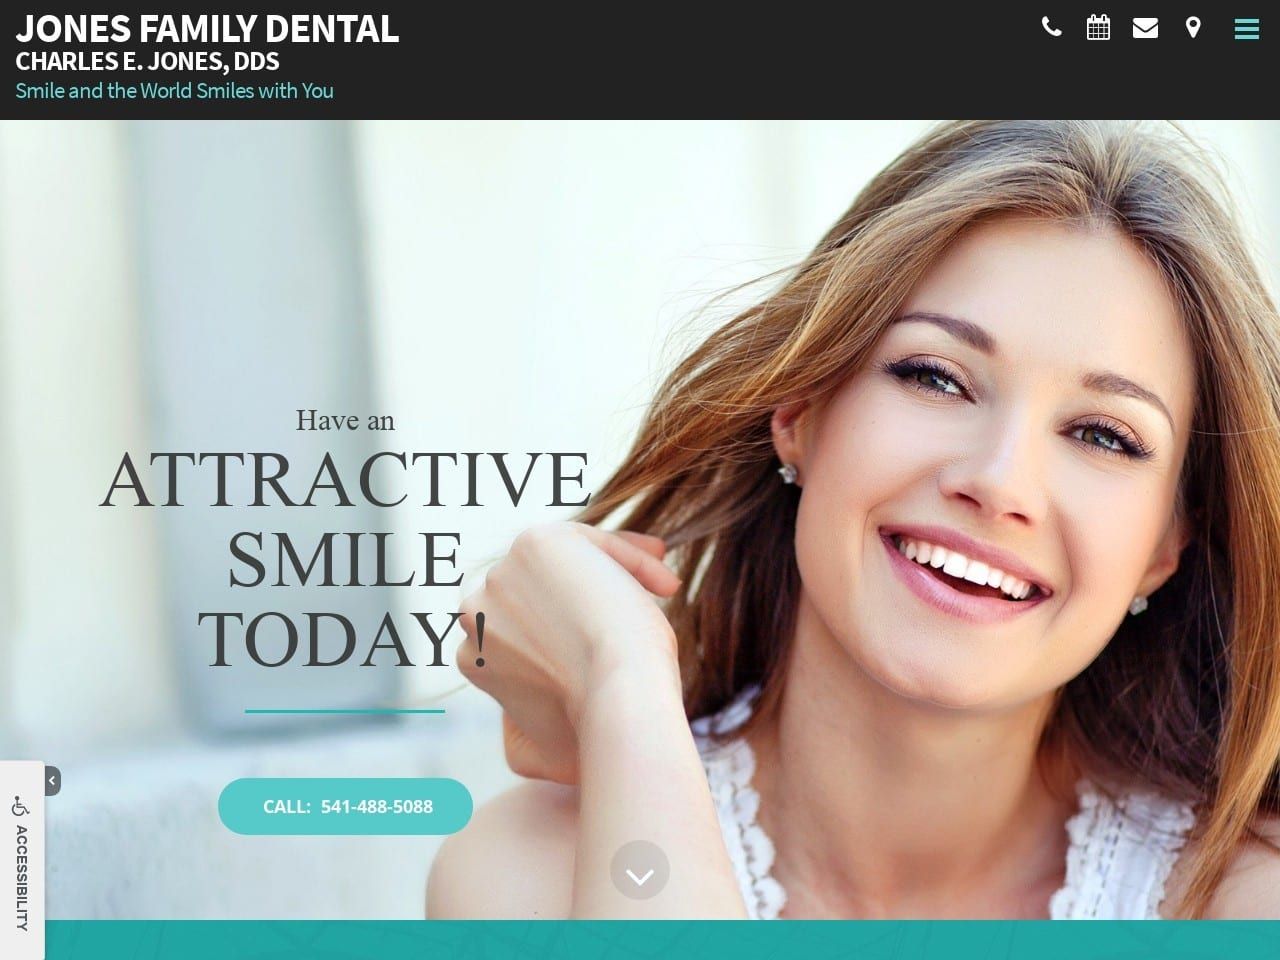 Jones Family Dental Website Screenshot from jonesfamilydental.net